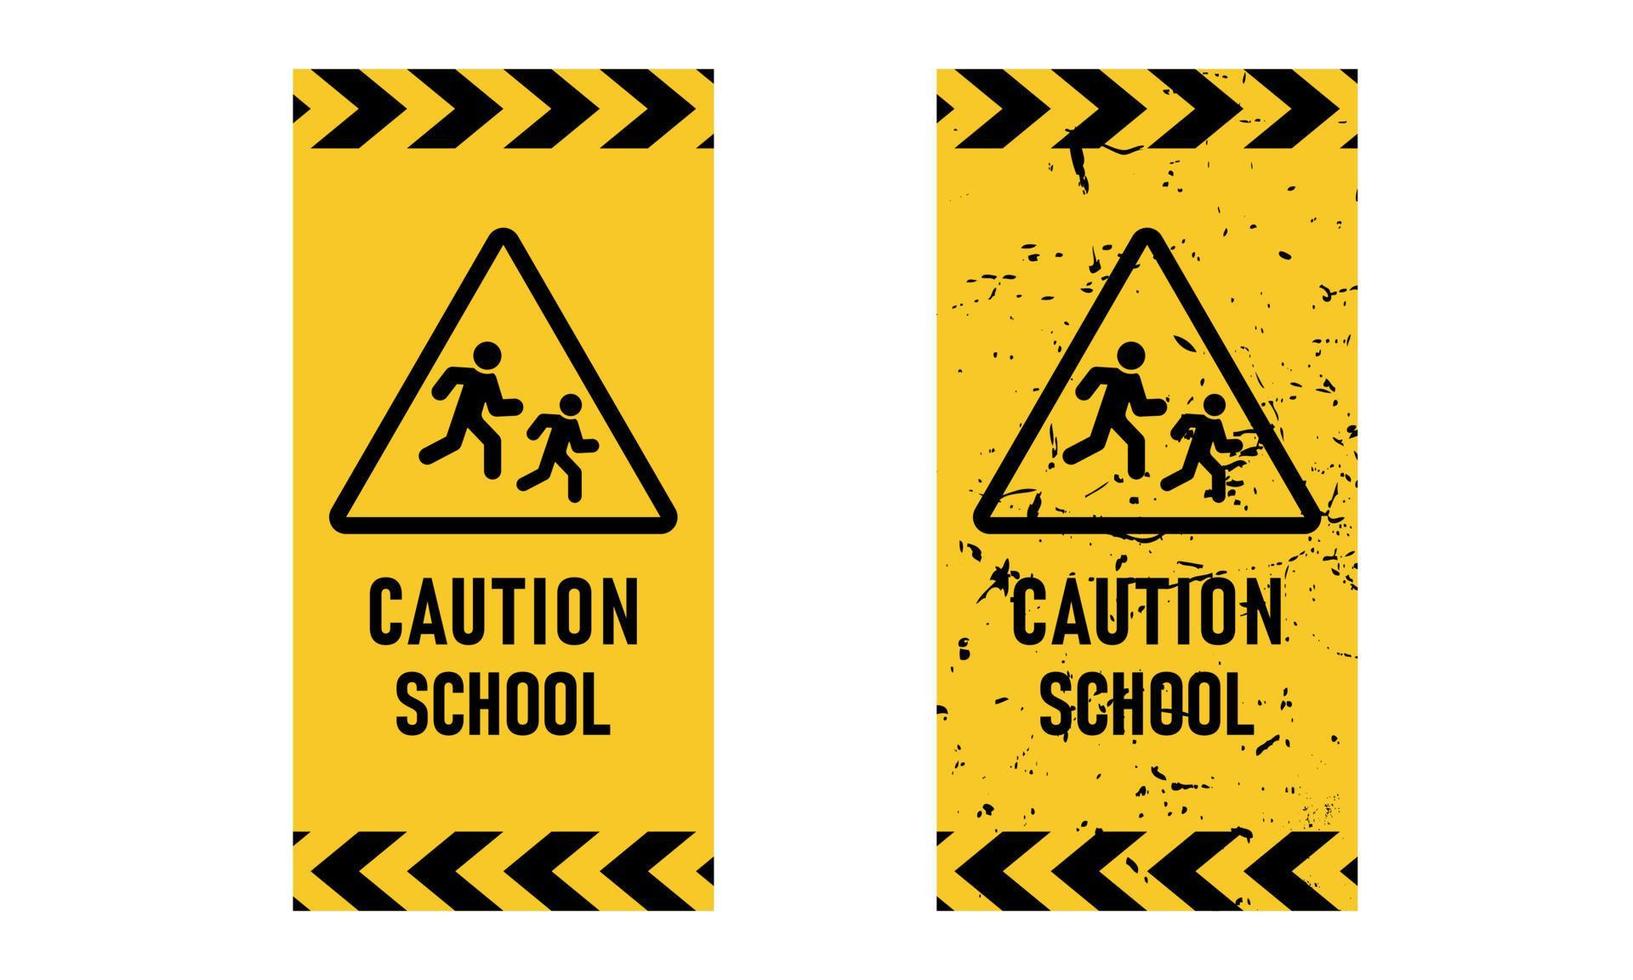 Caution school informational sign. Attention kids hazard banner. Yellow and black grunge background. Vector illustration